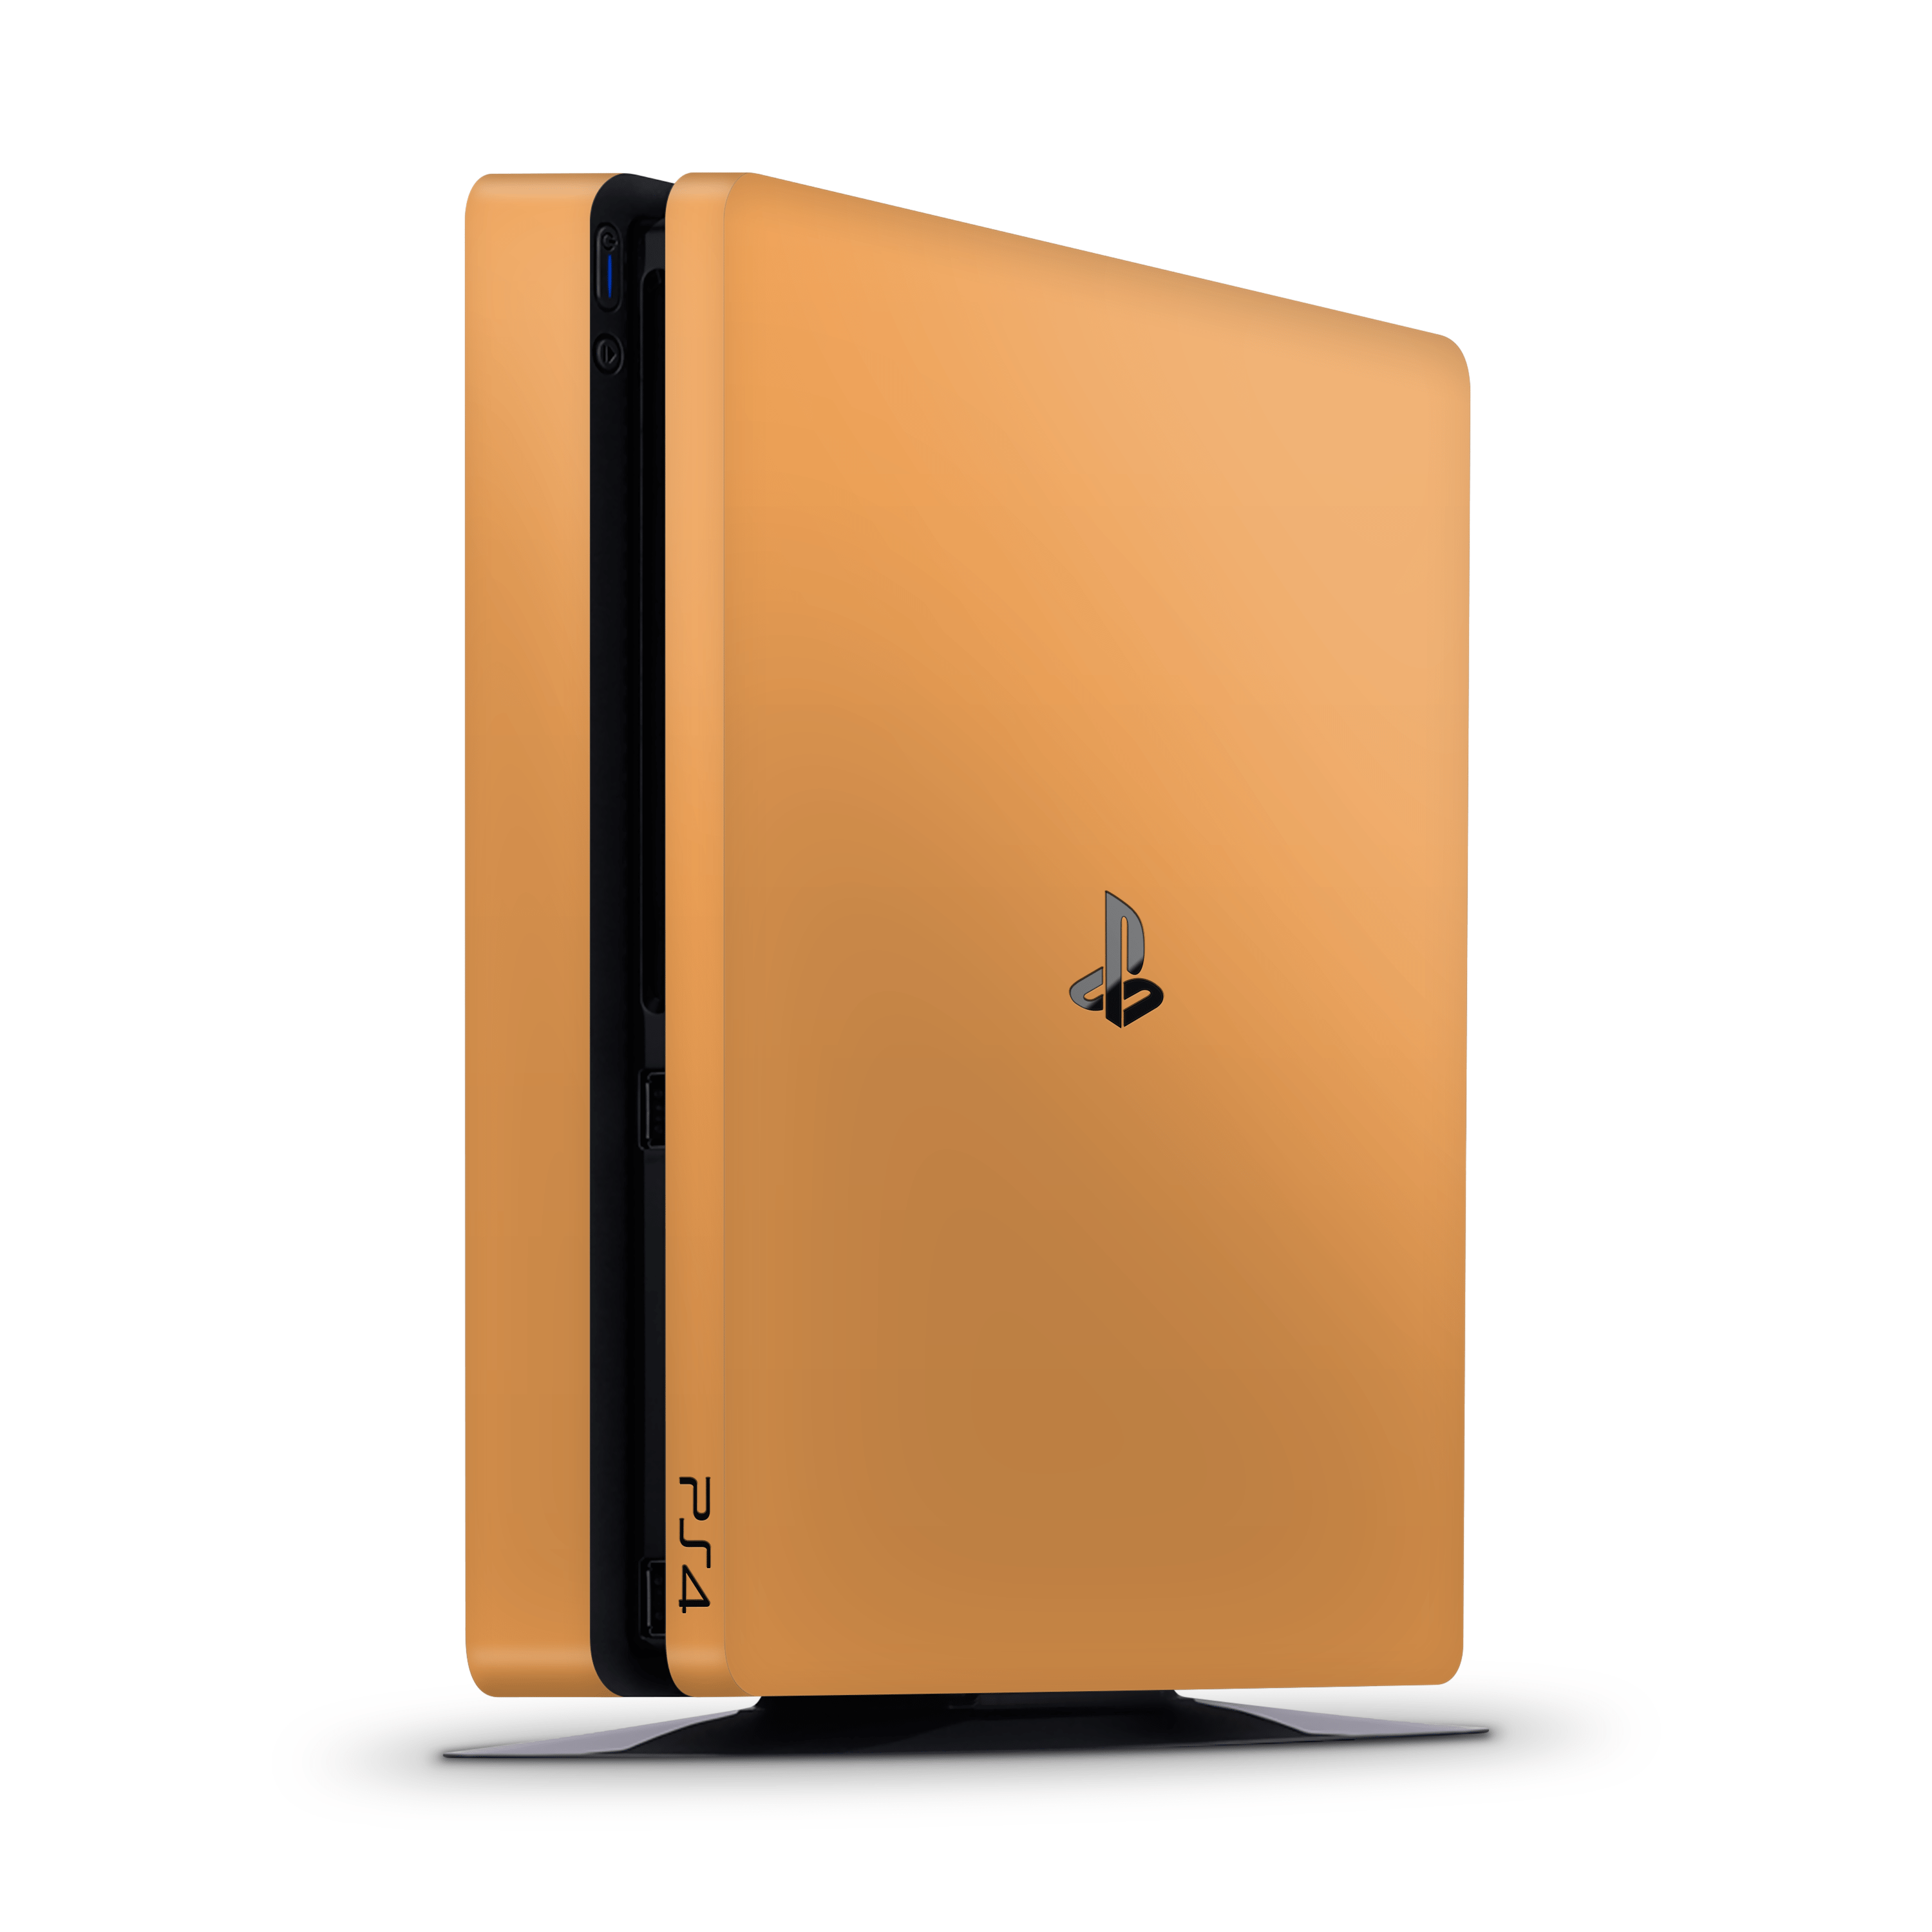 Retro Orange PS4 | PS4 Pro | PS4 Slim Skins